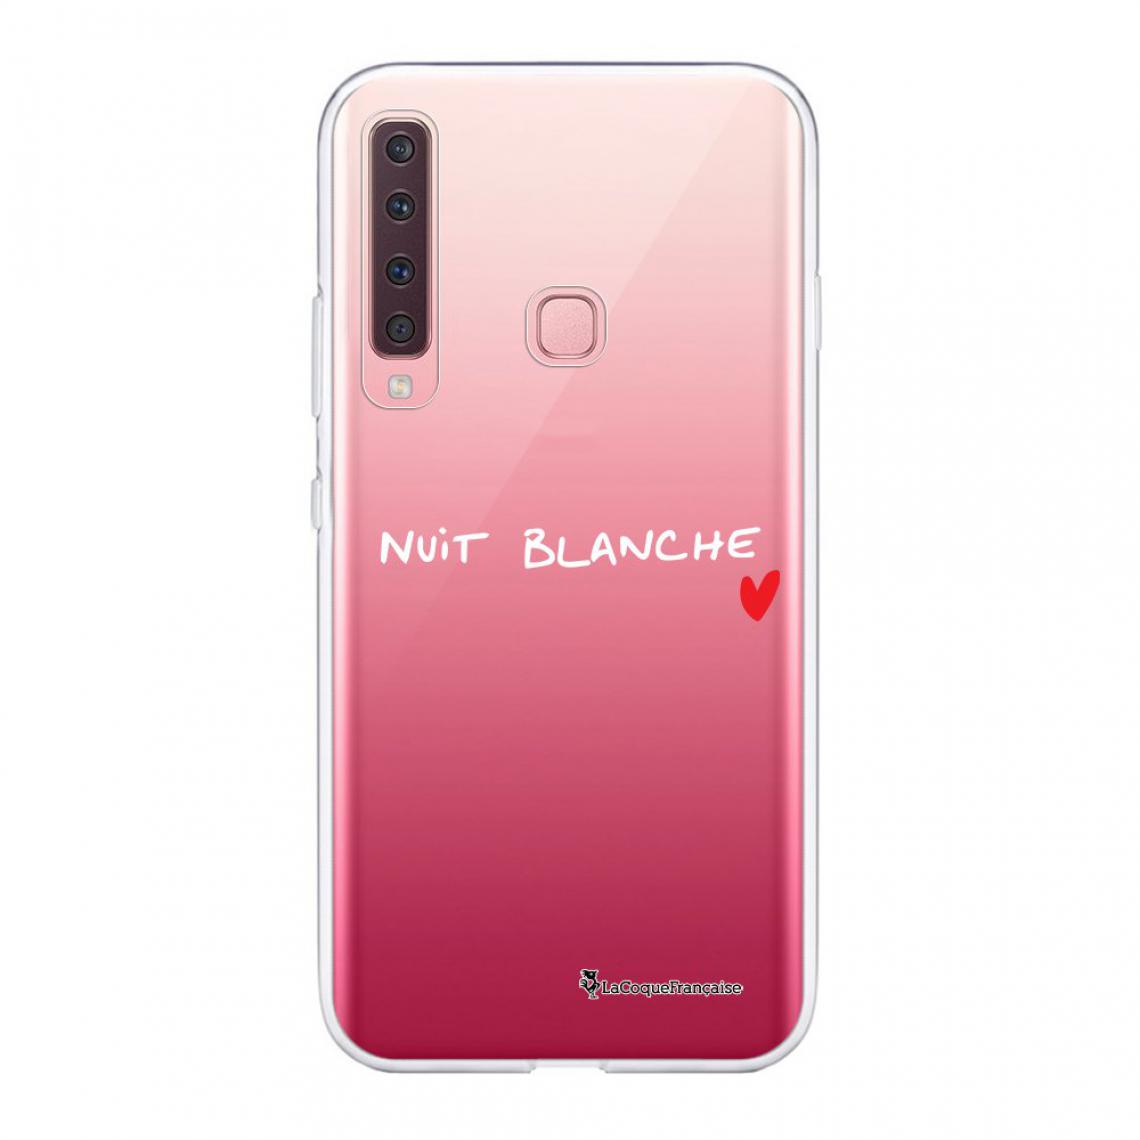 La Coque Francaise - Coque Samsung Galaxy A9 2018 souple silicone transparente - Coque, étui smartphone